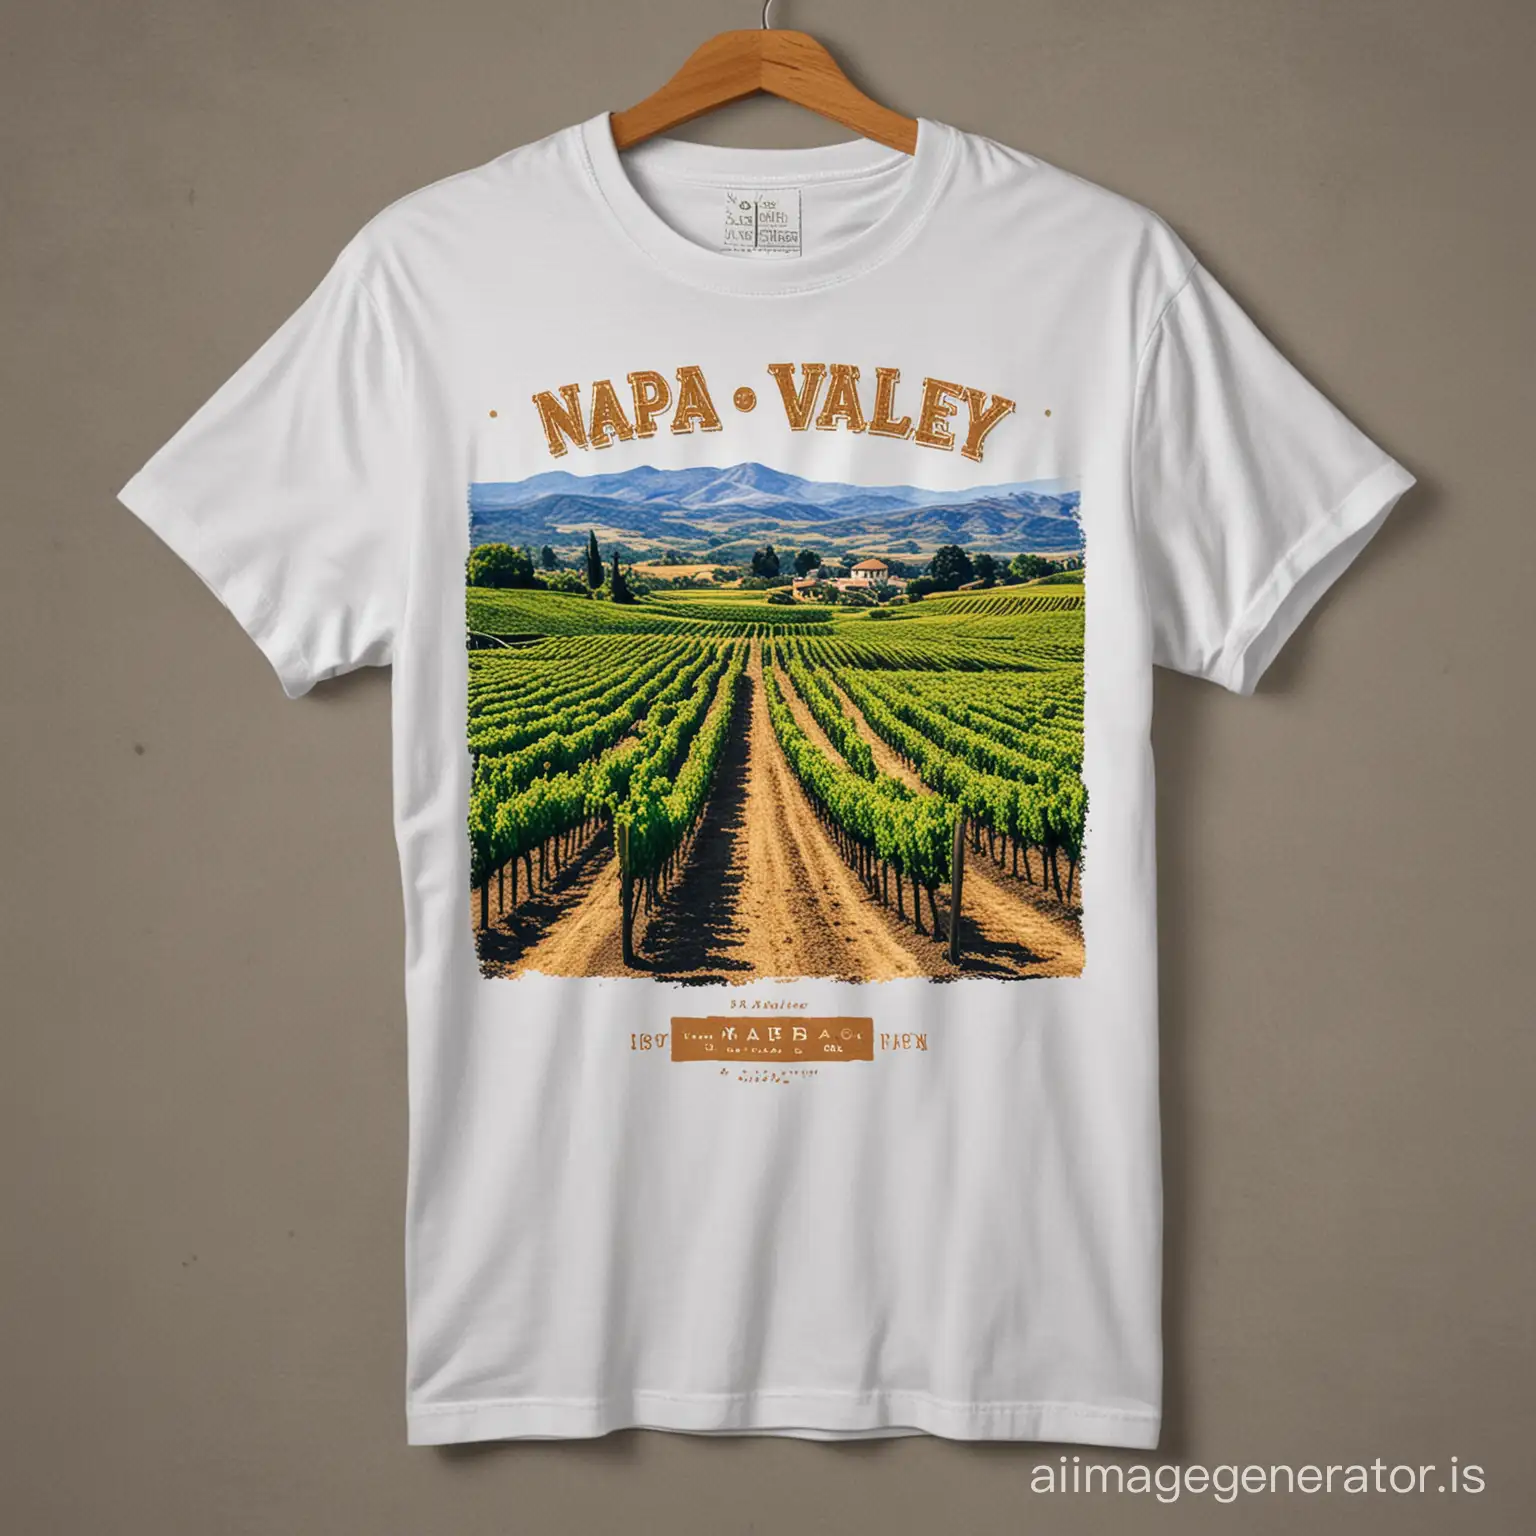 T shirt design of Napa valley